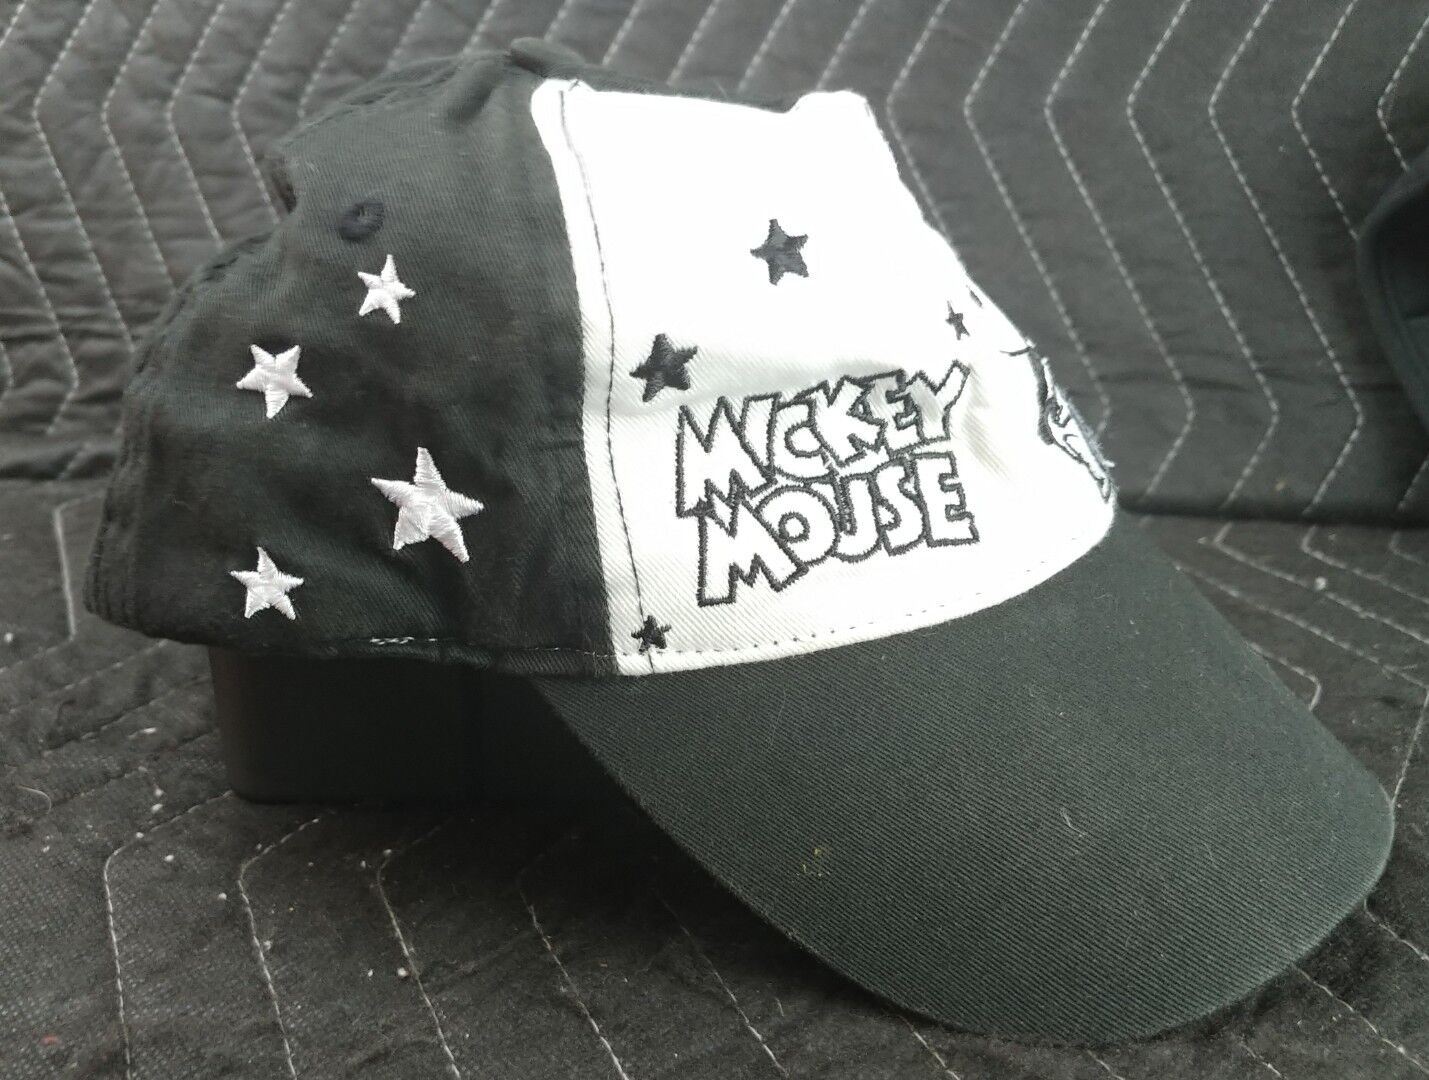 Mickey Mouse Vintage Disney Strapback Hat Cap